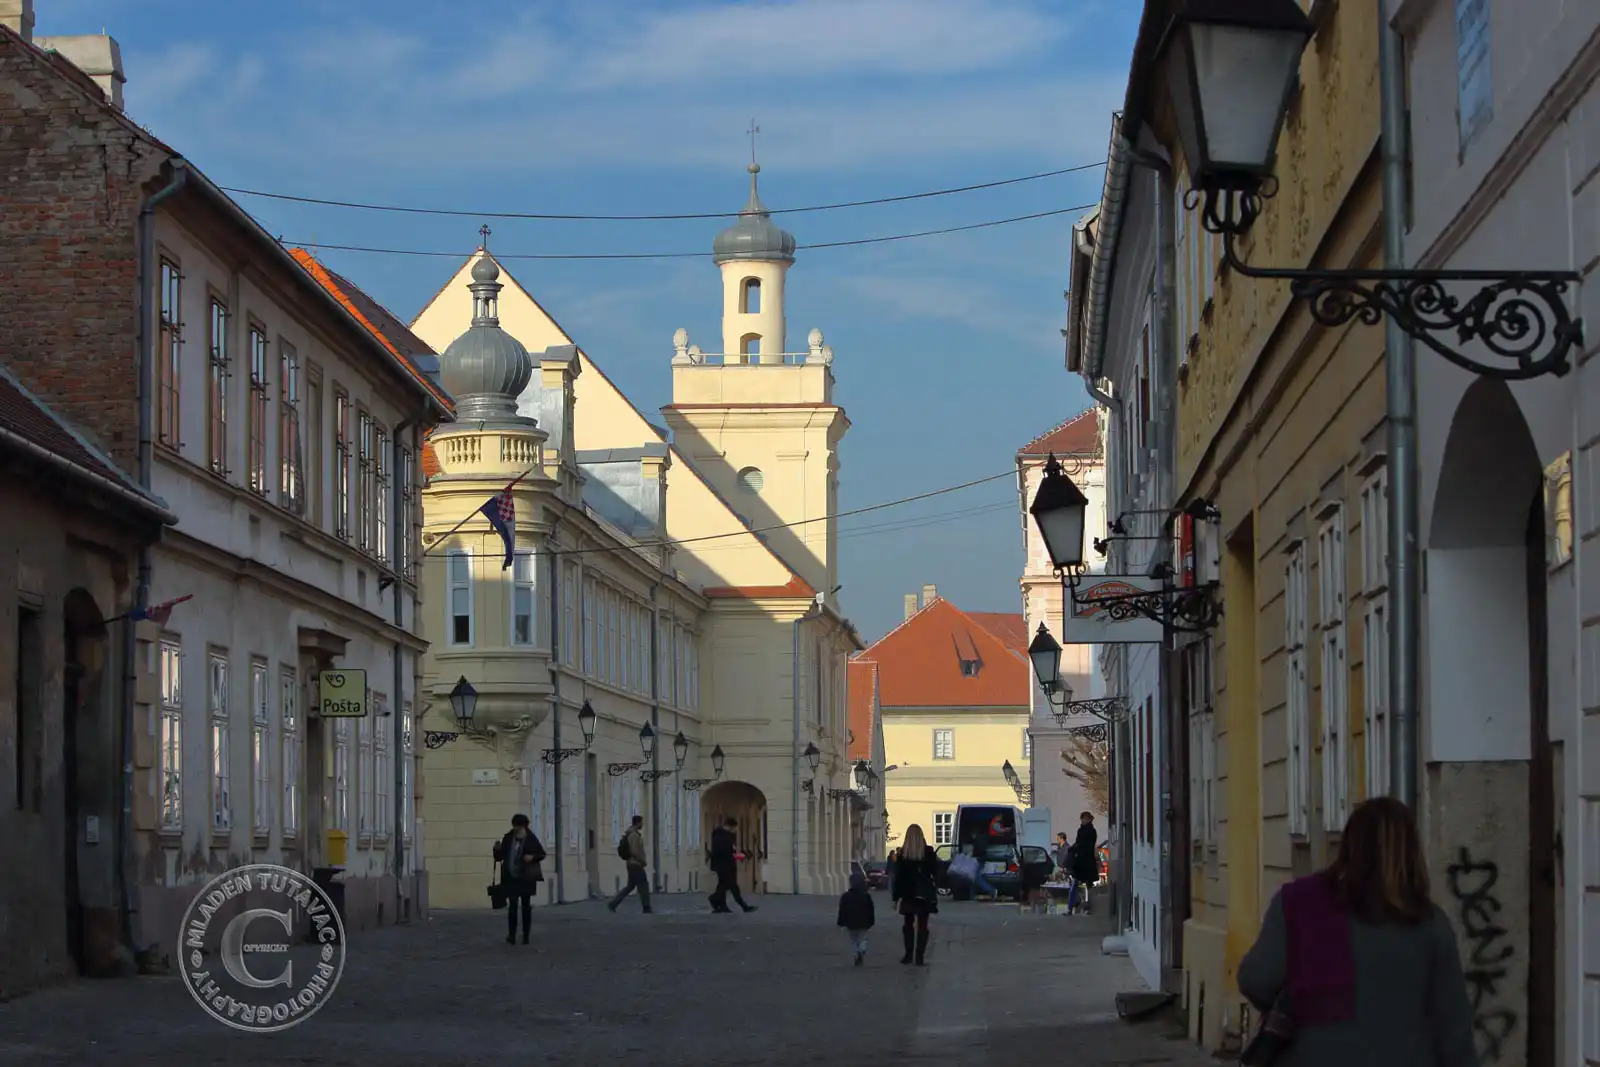 Tour guide:The Citadel of Osijek